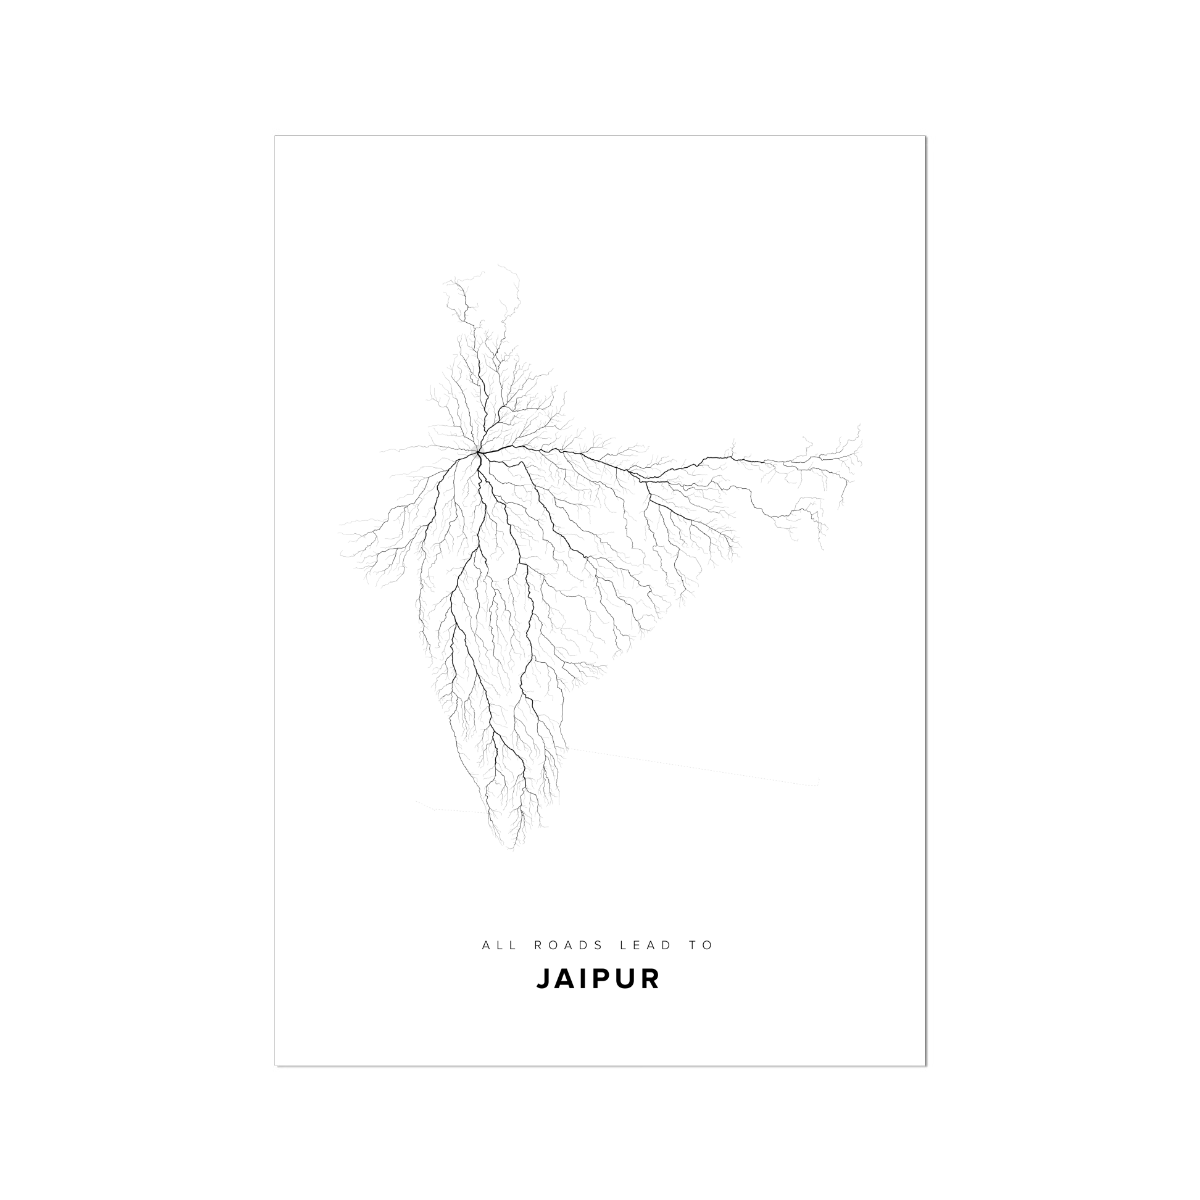 All roads lead to Jaipur (India) Fine Art Map Print